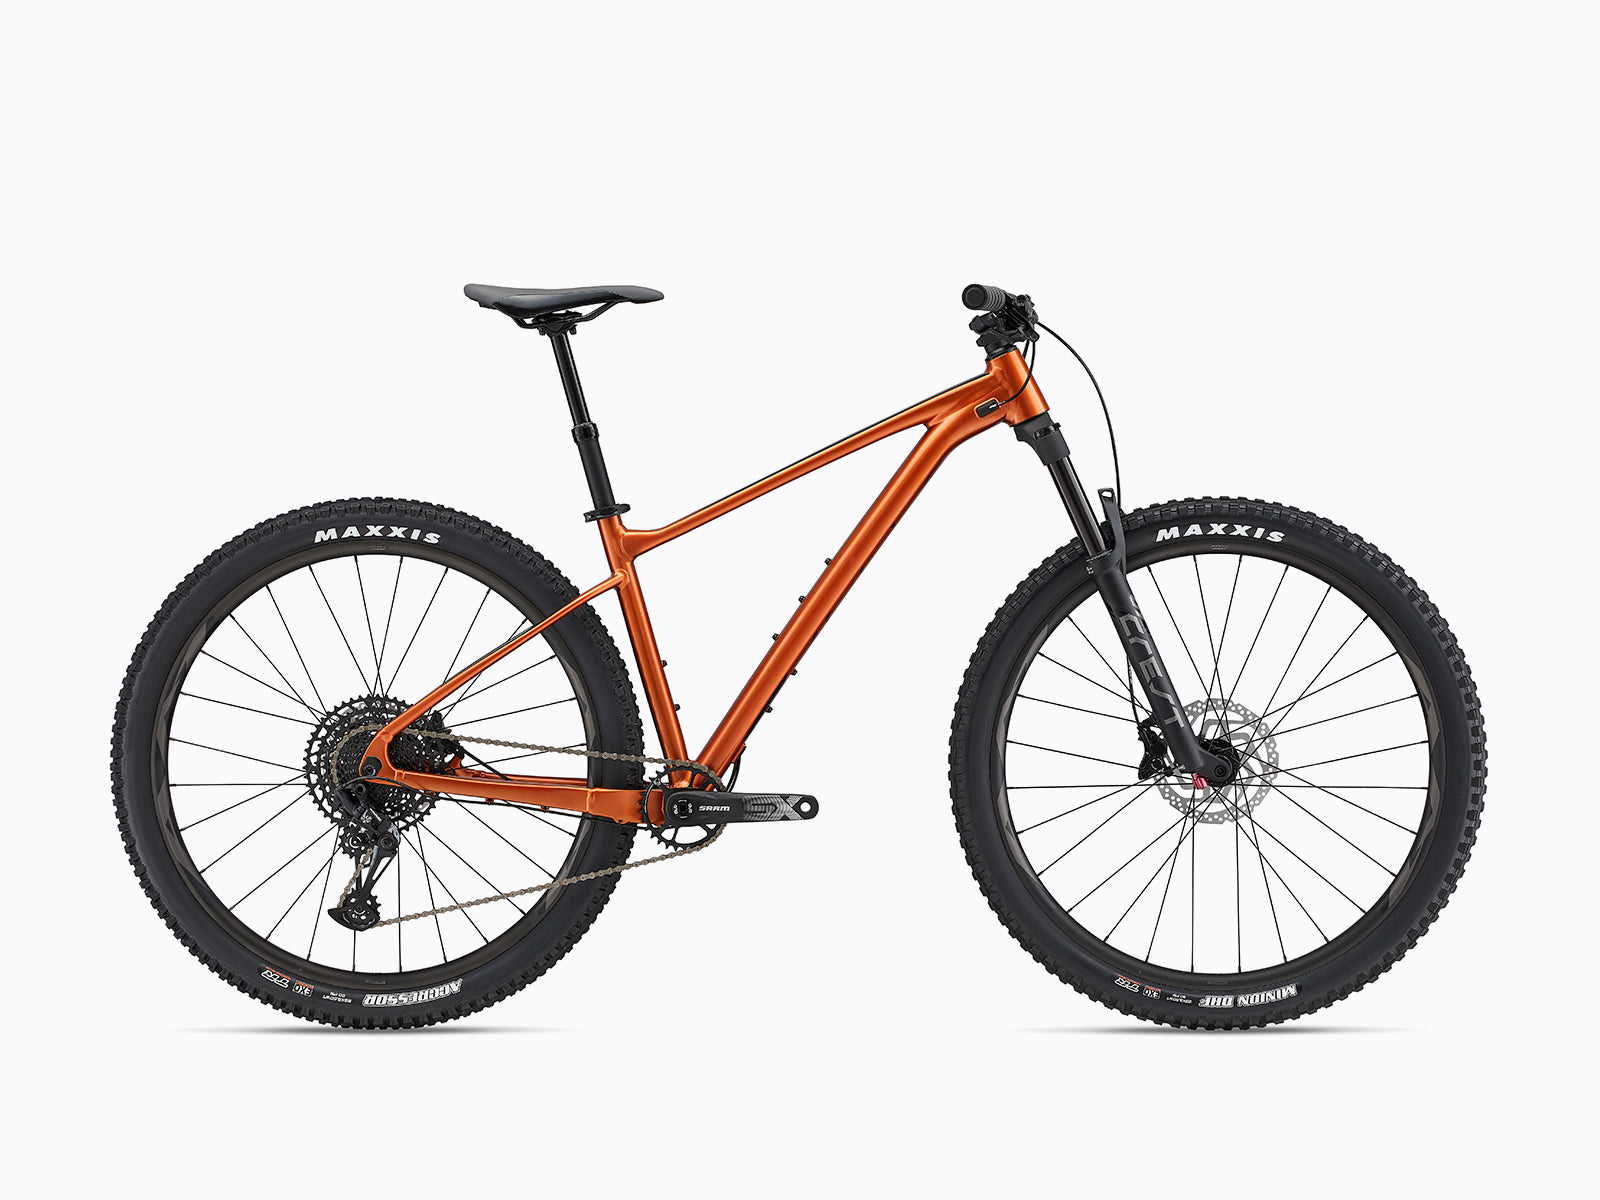 image features a Giant Fathom 29 1, a premium hardtail mountain bike in orange colour